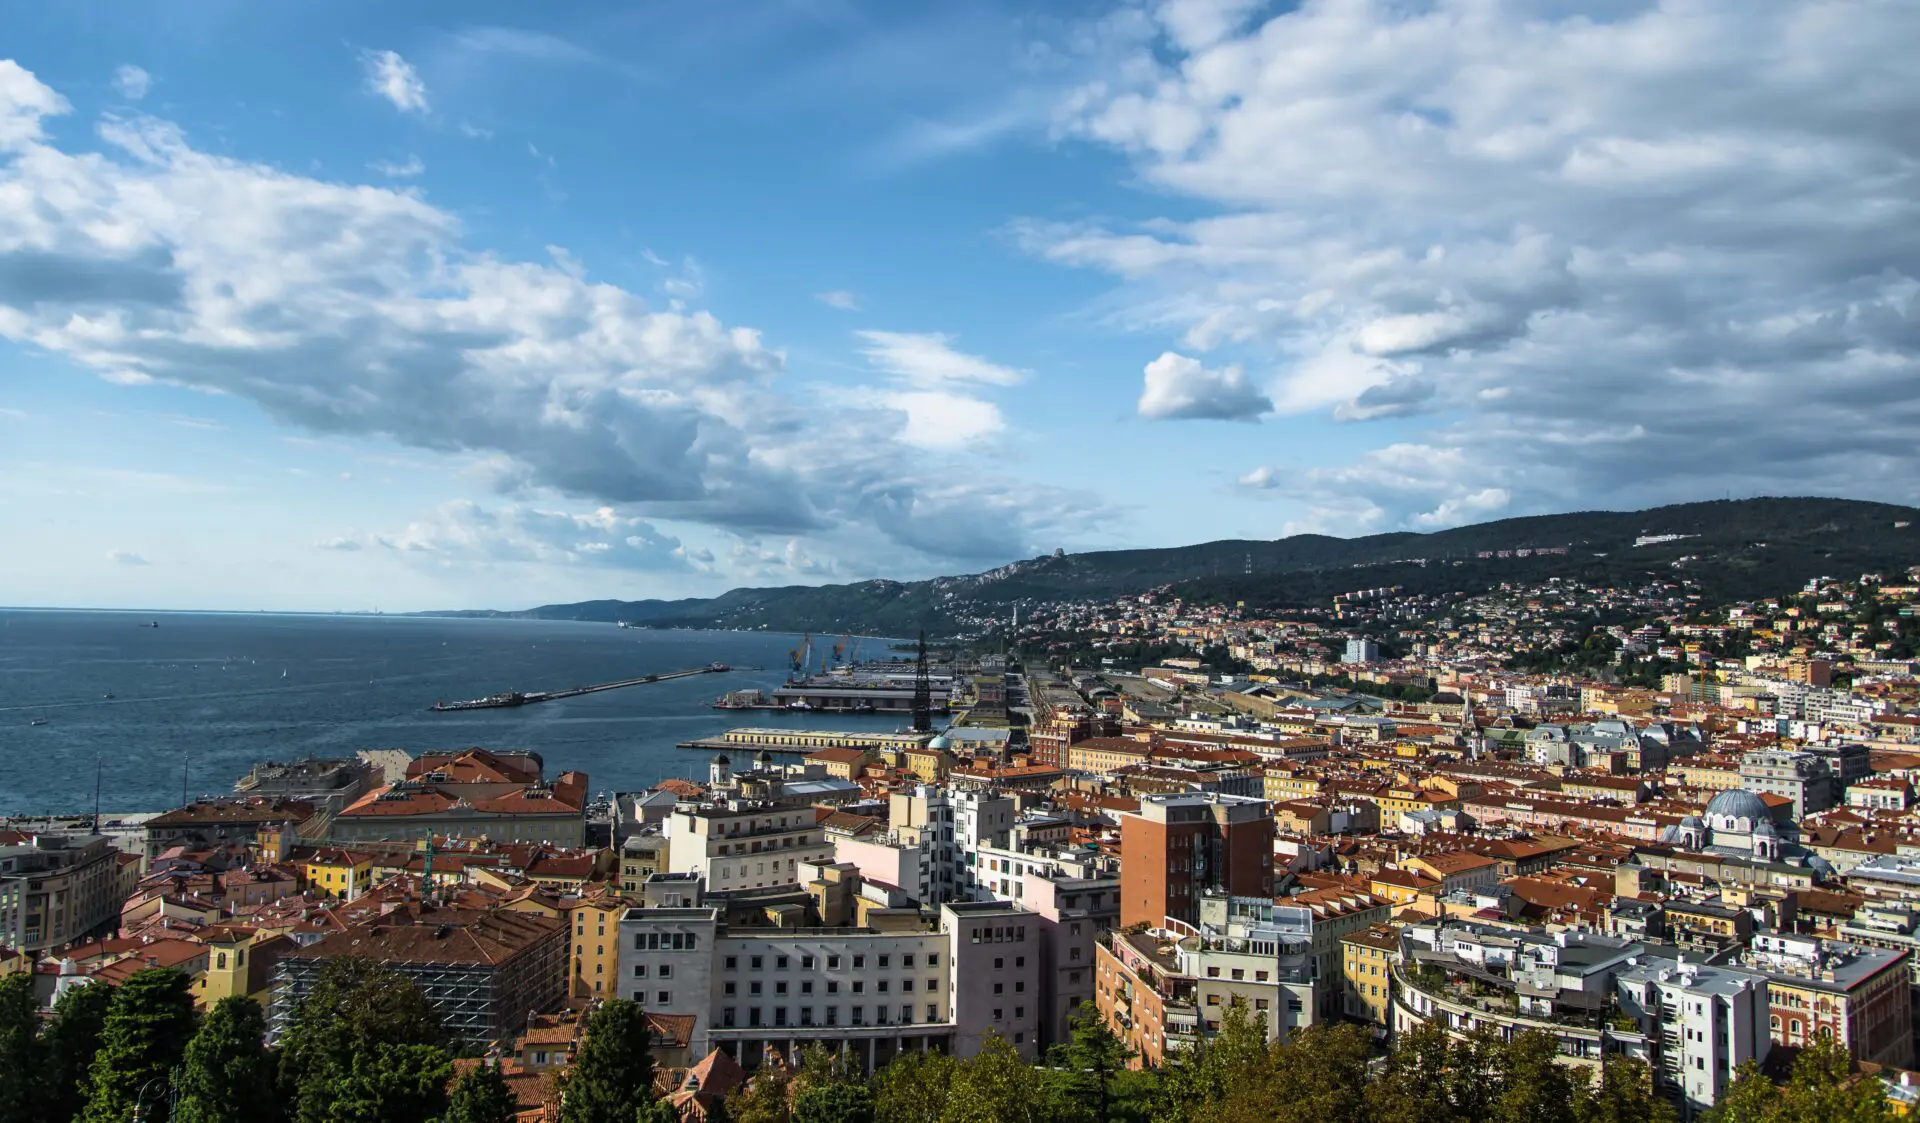 Photos of Trieste